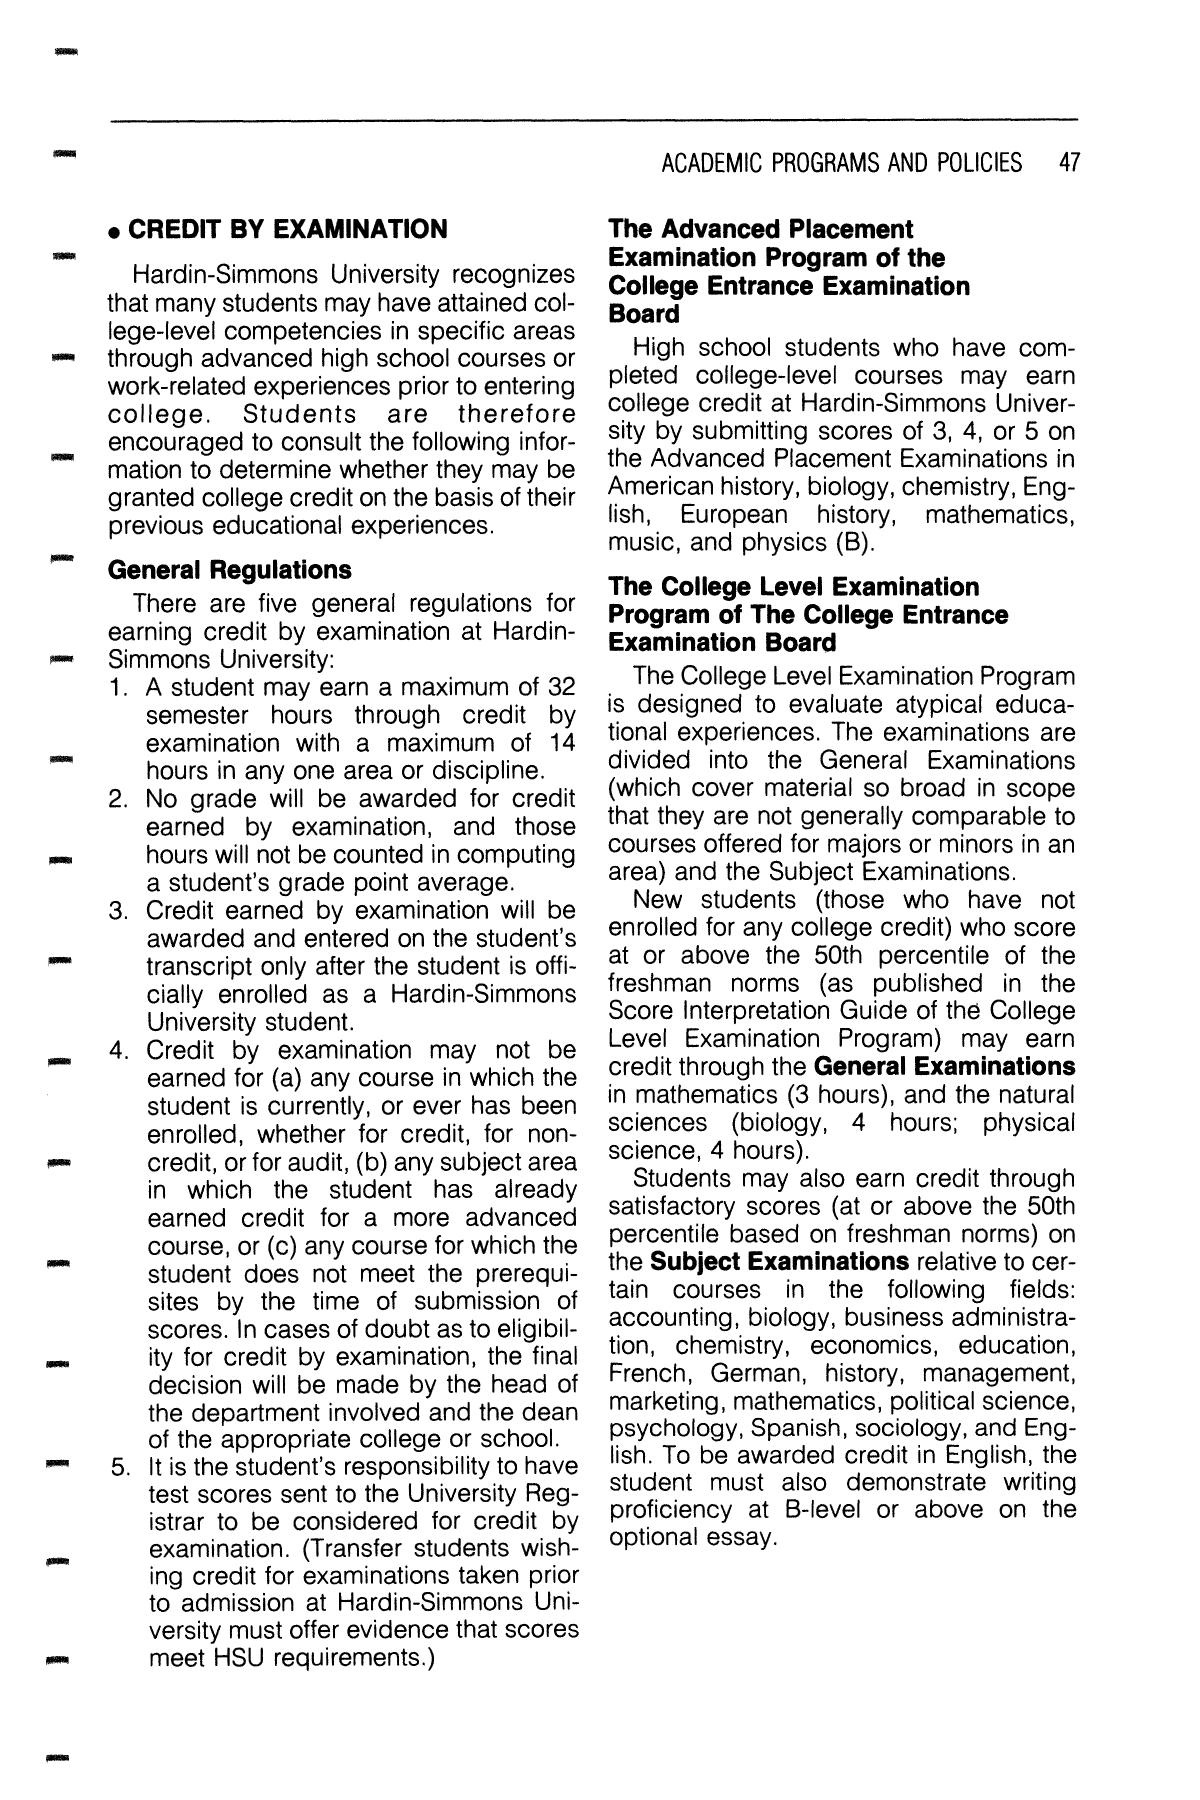 Catalog of Hardin-Simmons University, 1985-1986 Undergraduate Bulletin
                                                
                                                    47
                                                